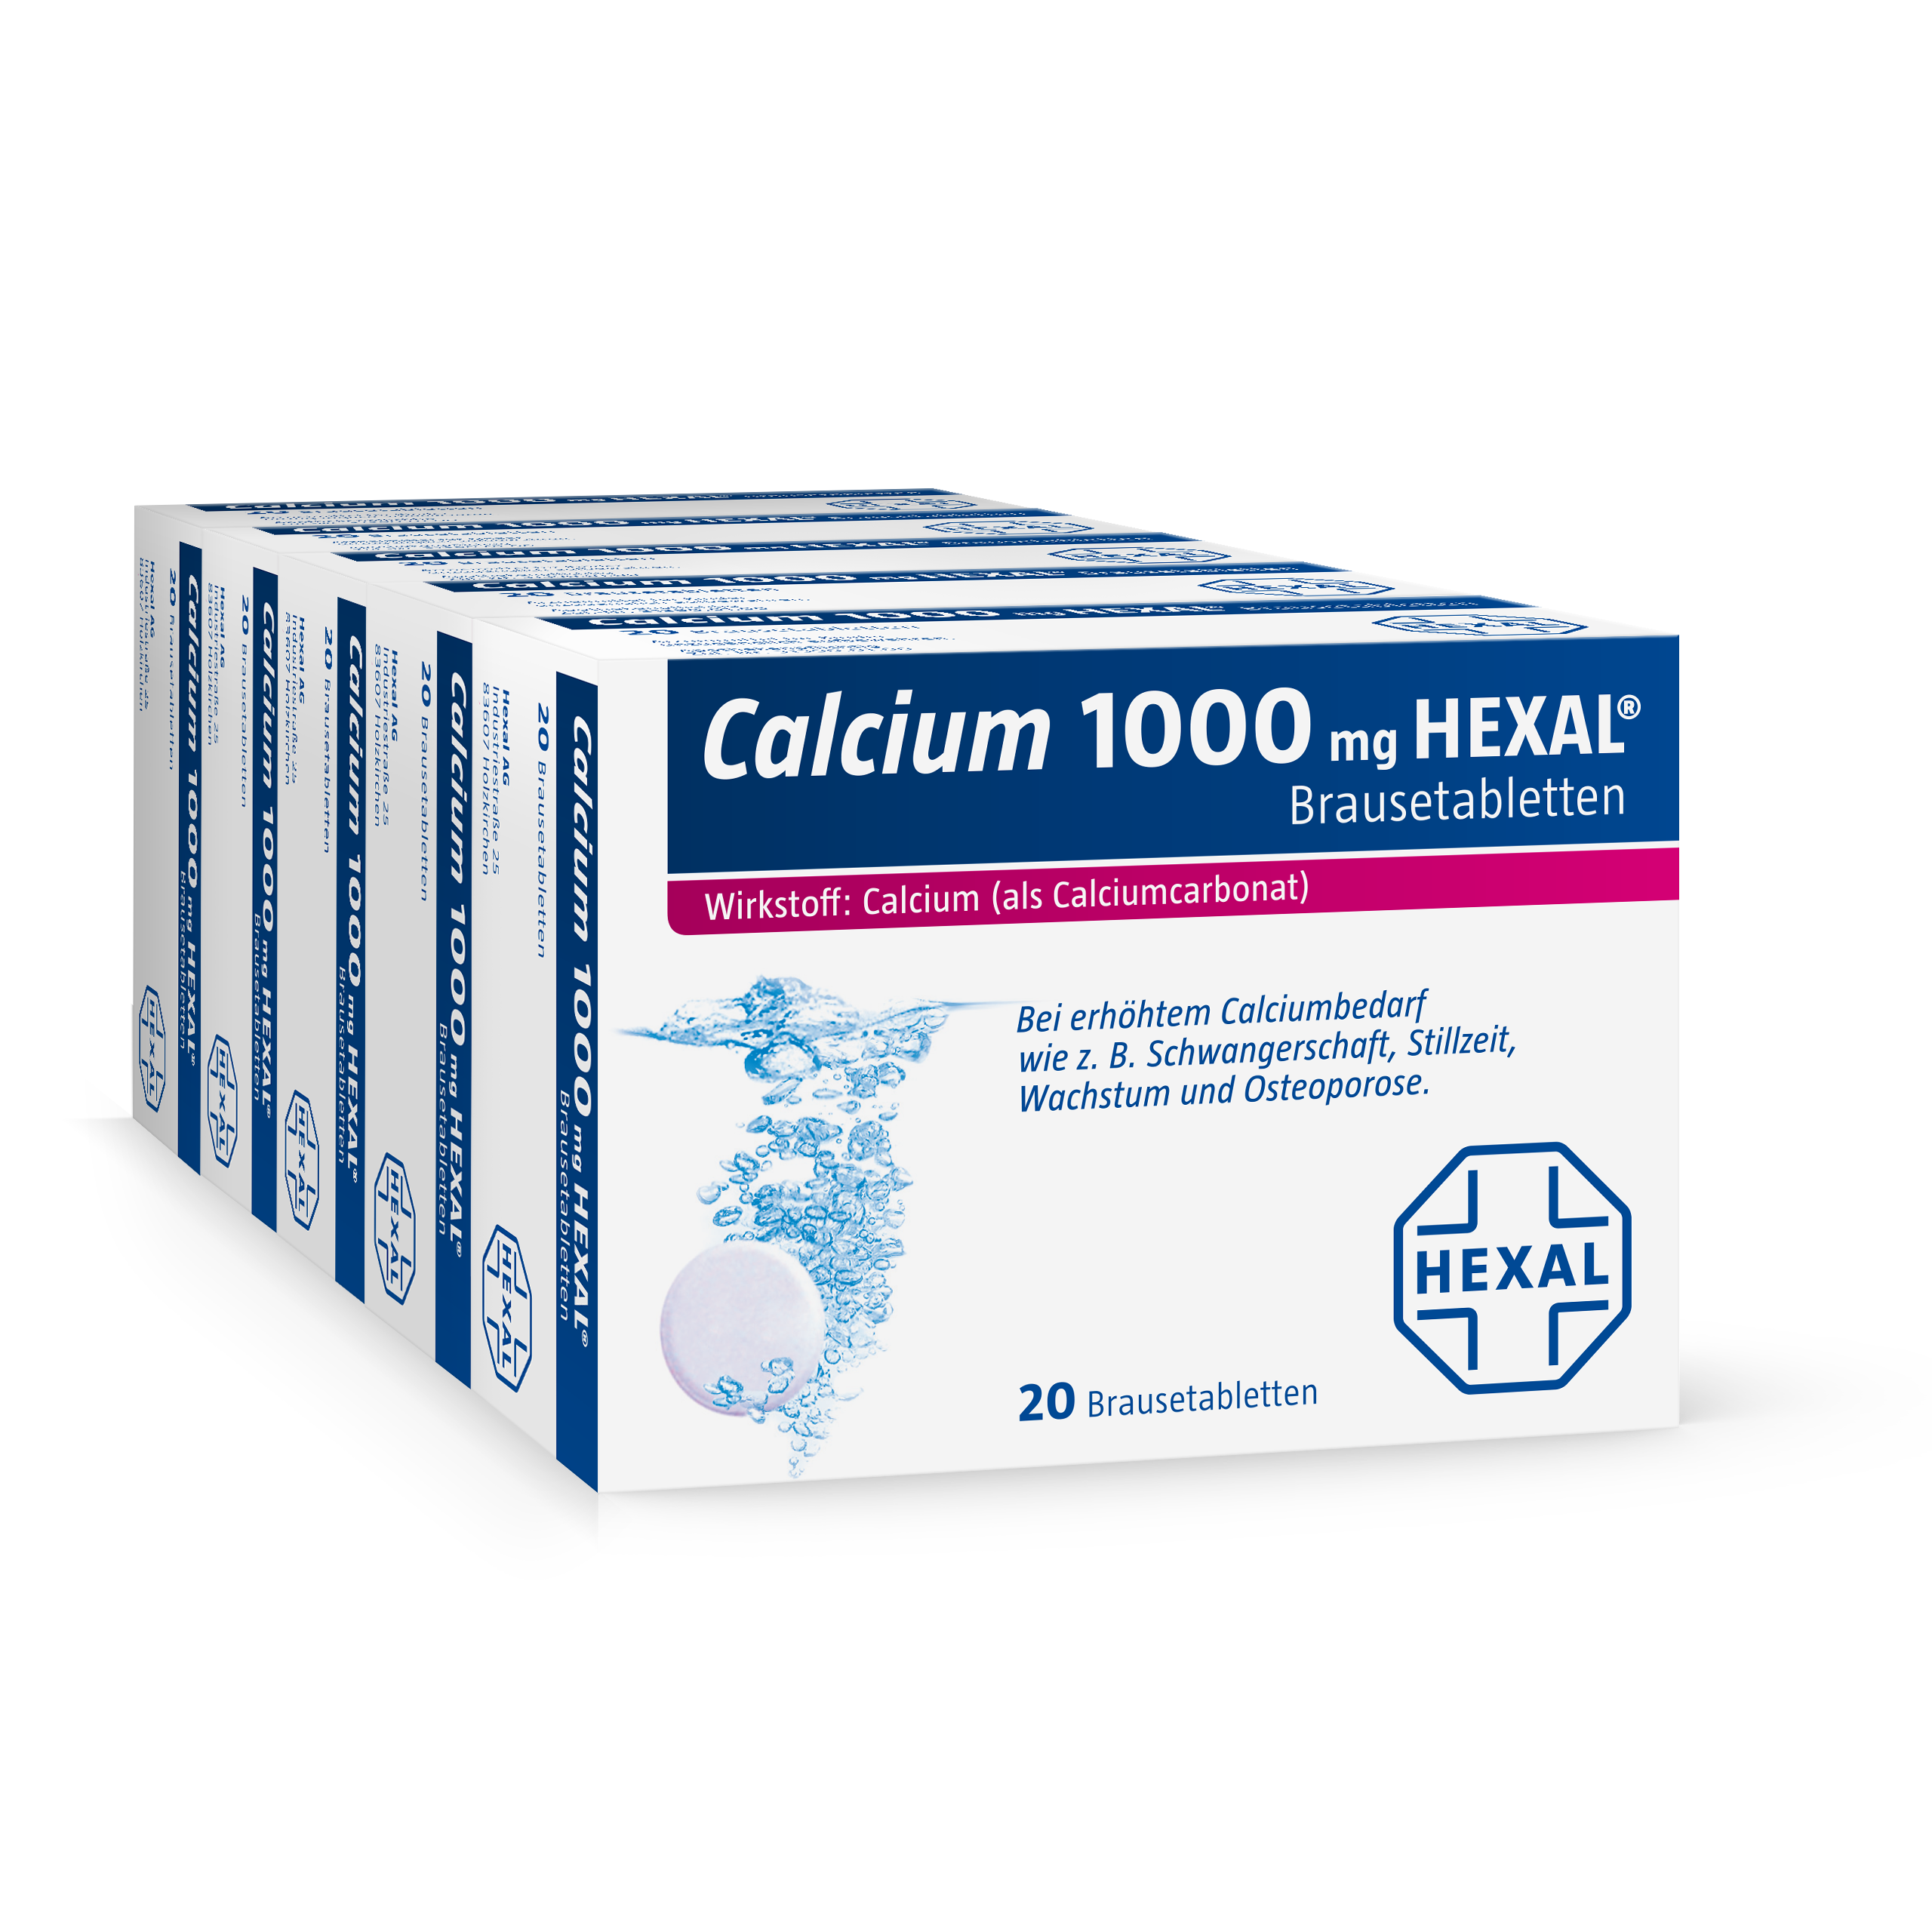 Calcium 1000mg HEXAL (100 stk)